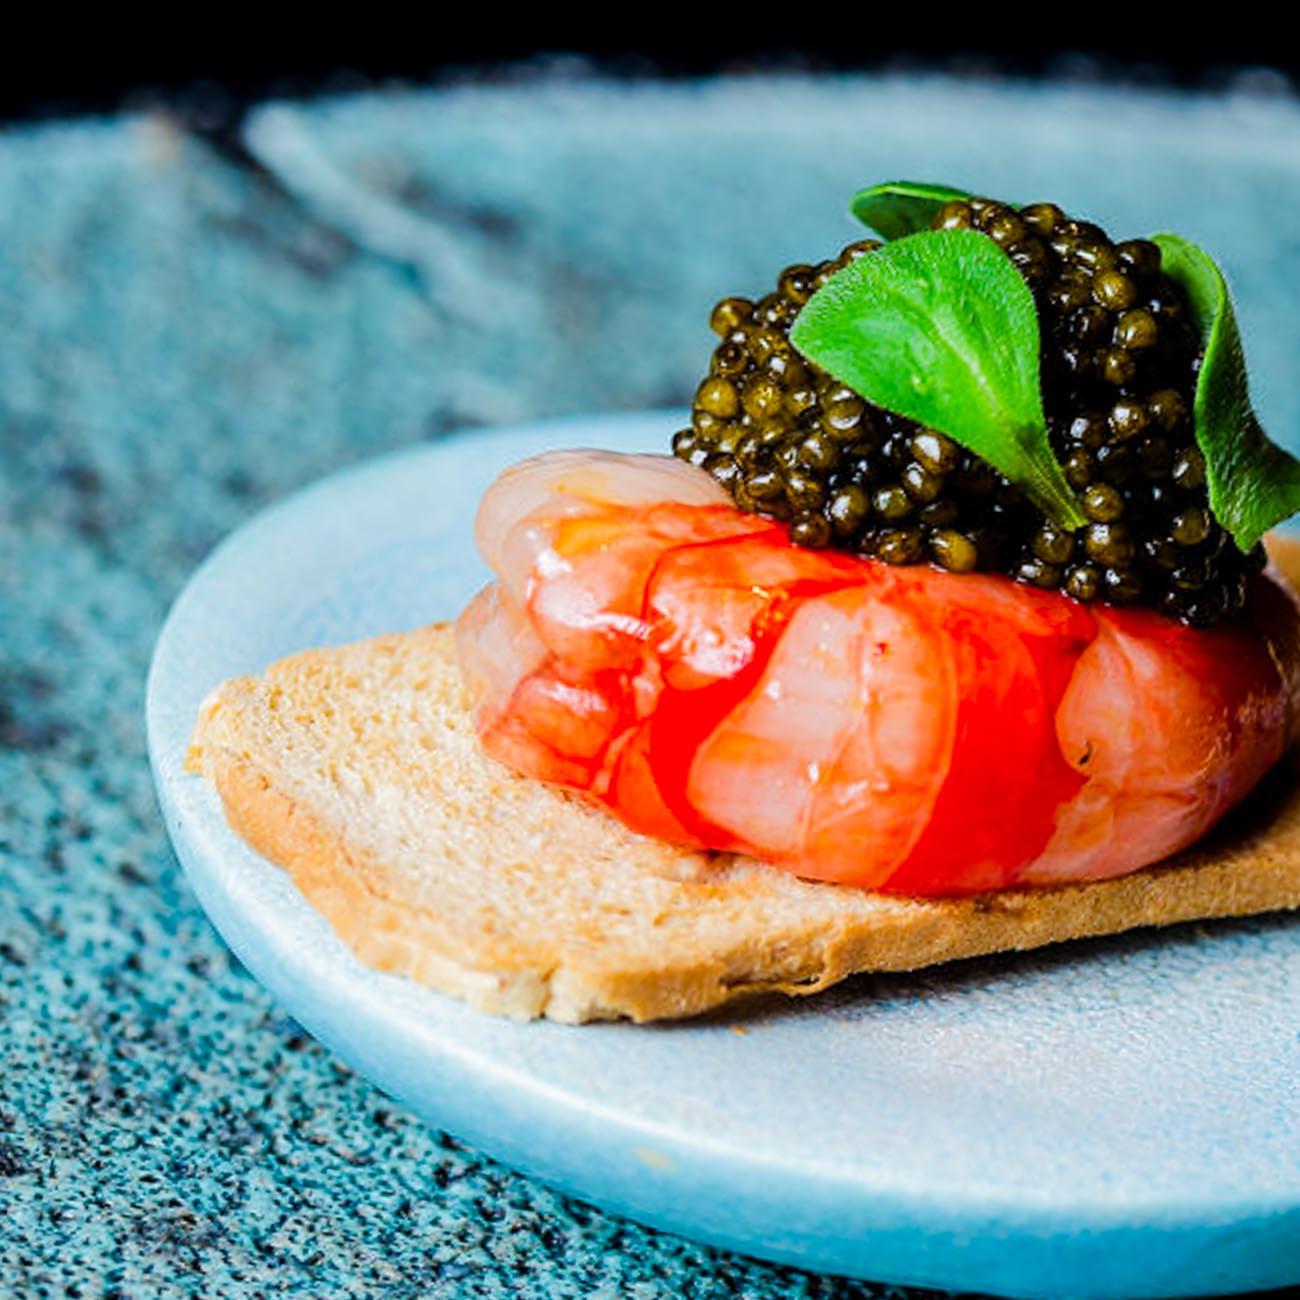 Kaluga Caviar Served on Shrimp and Toast